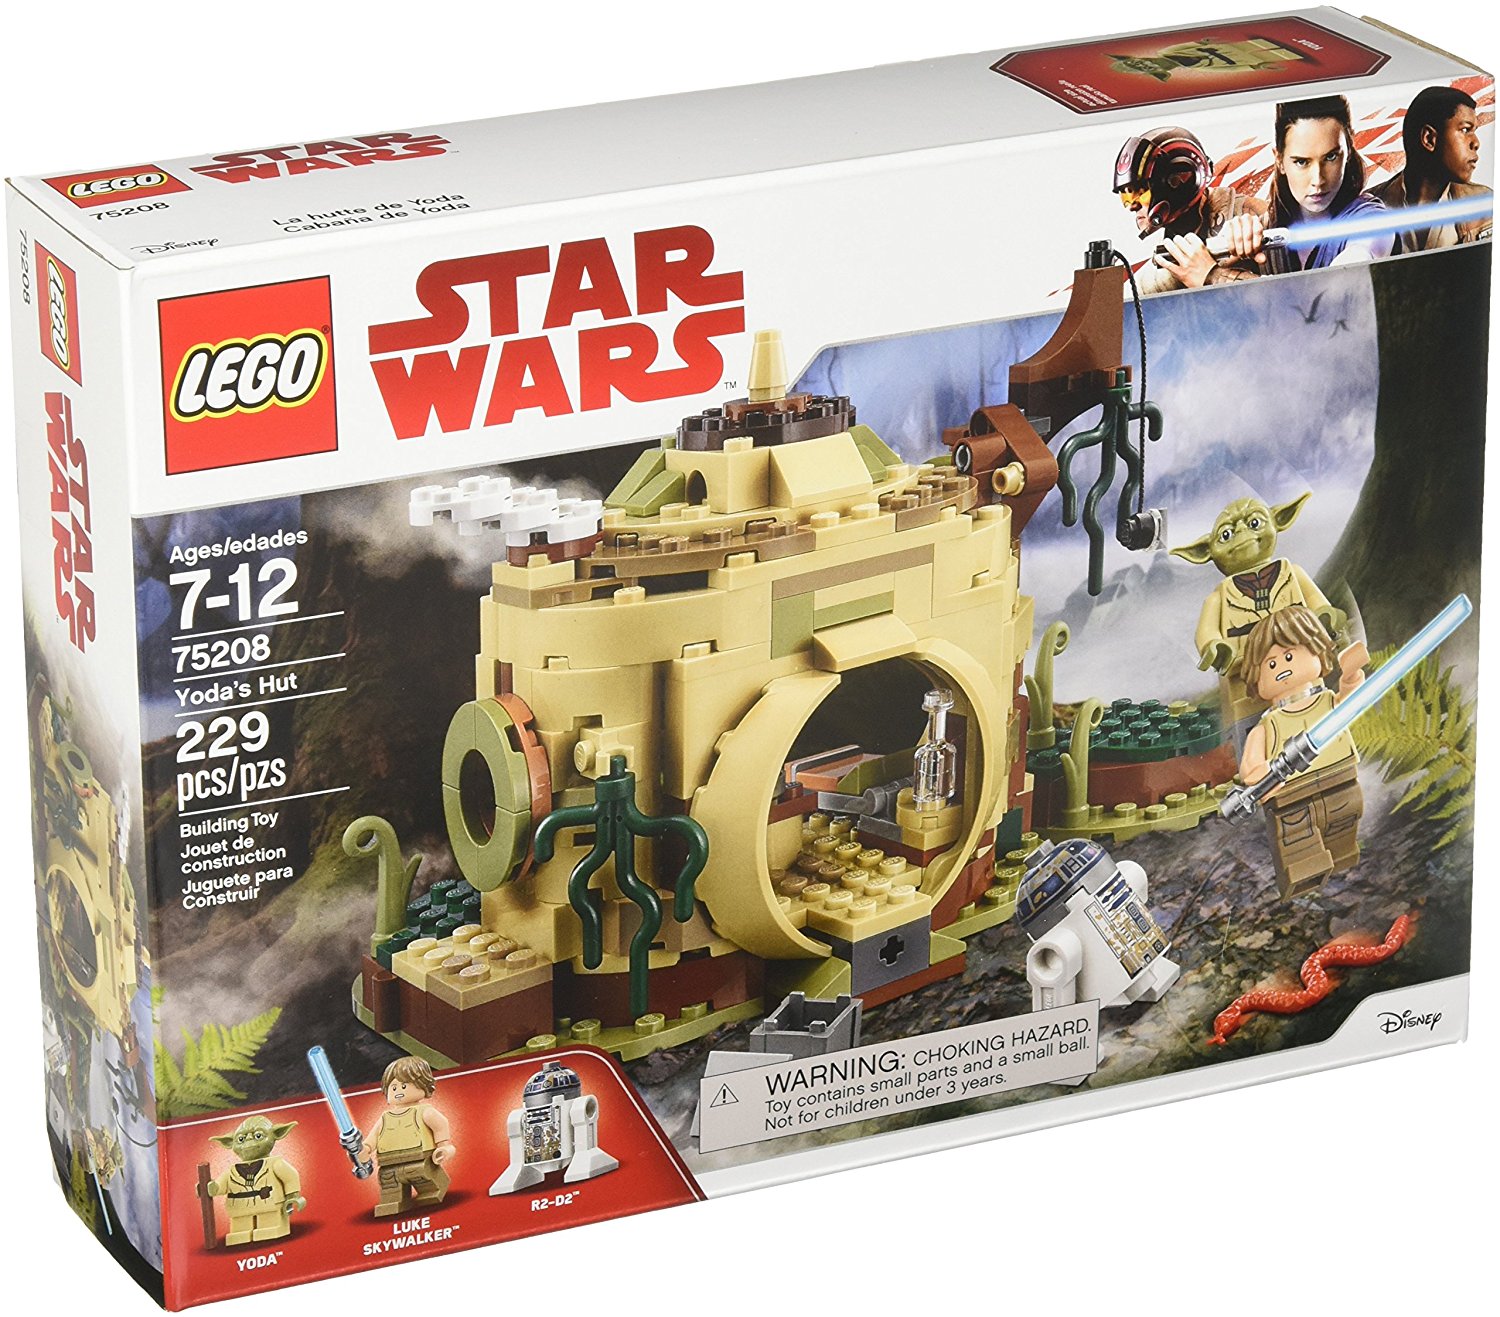 TLJ (TESB) Yoda's Hut Lego Set 1